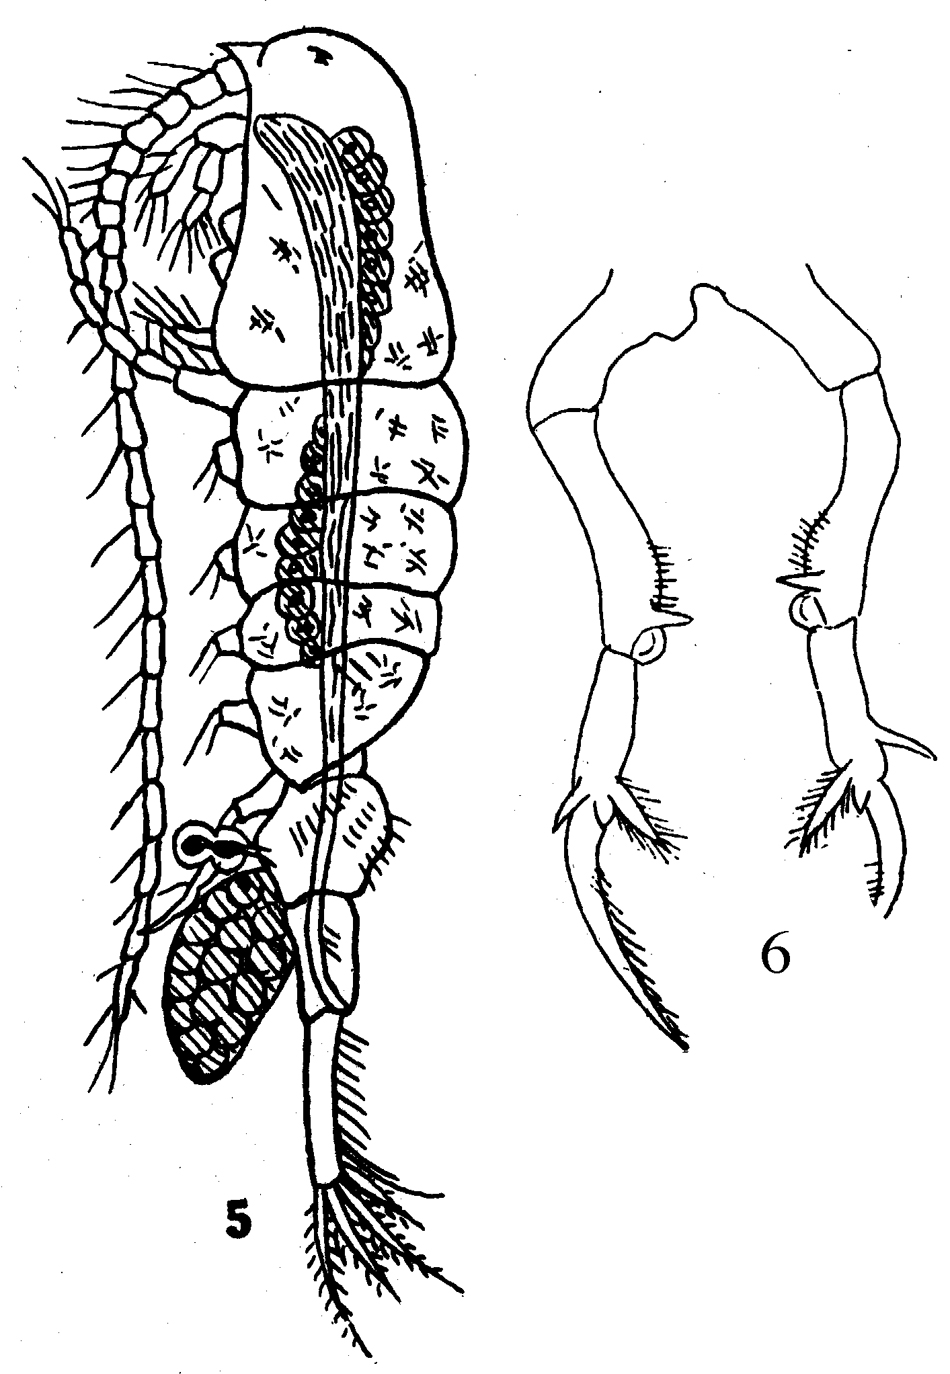 Species Pseudodiaptomus pelagicus - Plate 7 of morphological figures